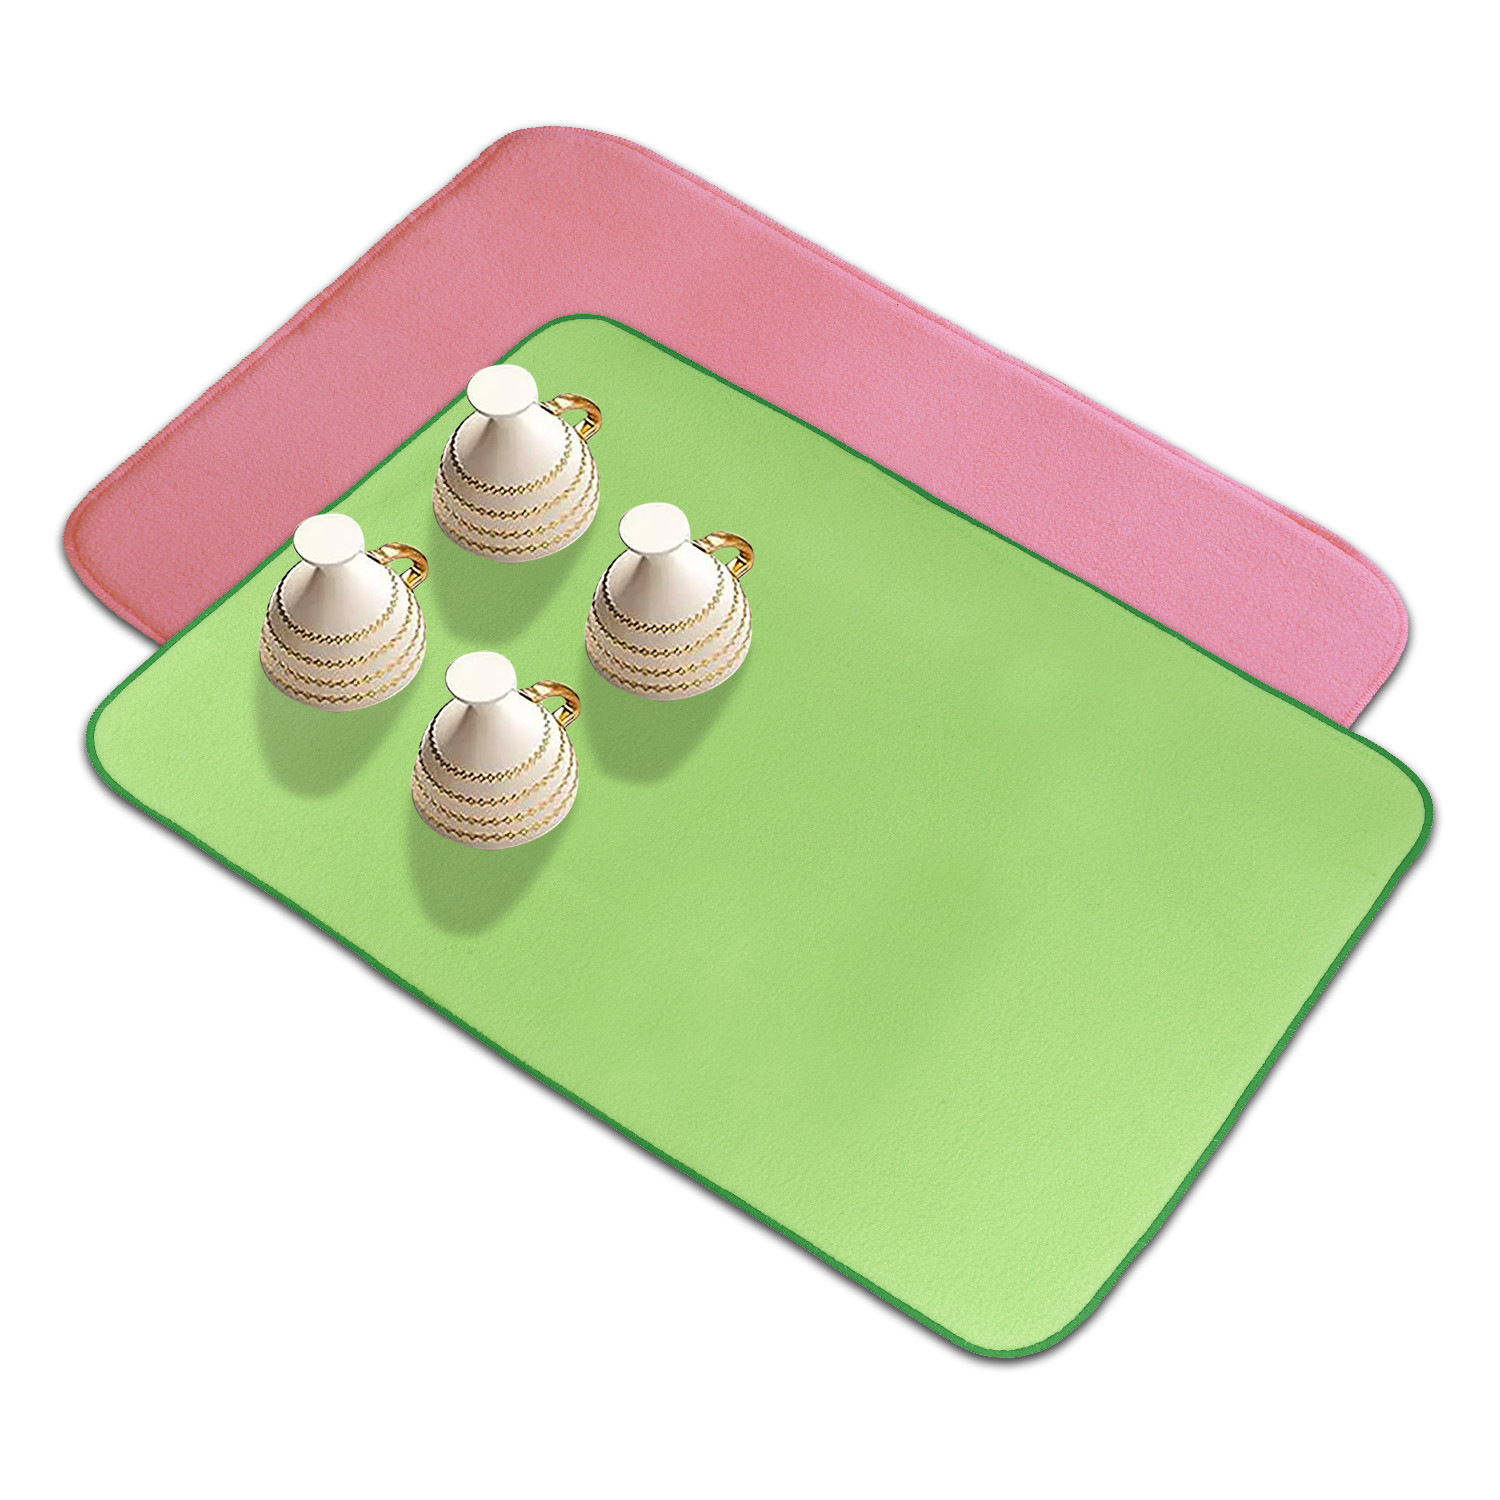 Kuber Industries Dish Dry Mat | Microfiber Drying Mat | Reversible Kitchen Drying Mat | Absorbent Mat | Kitchen Dish Dry Mat | 38x50 | Pack of 2 | Pink & Green